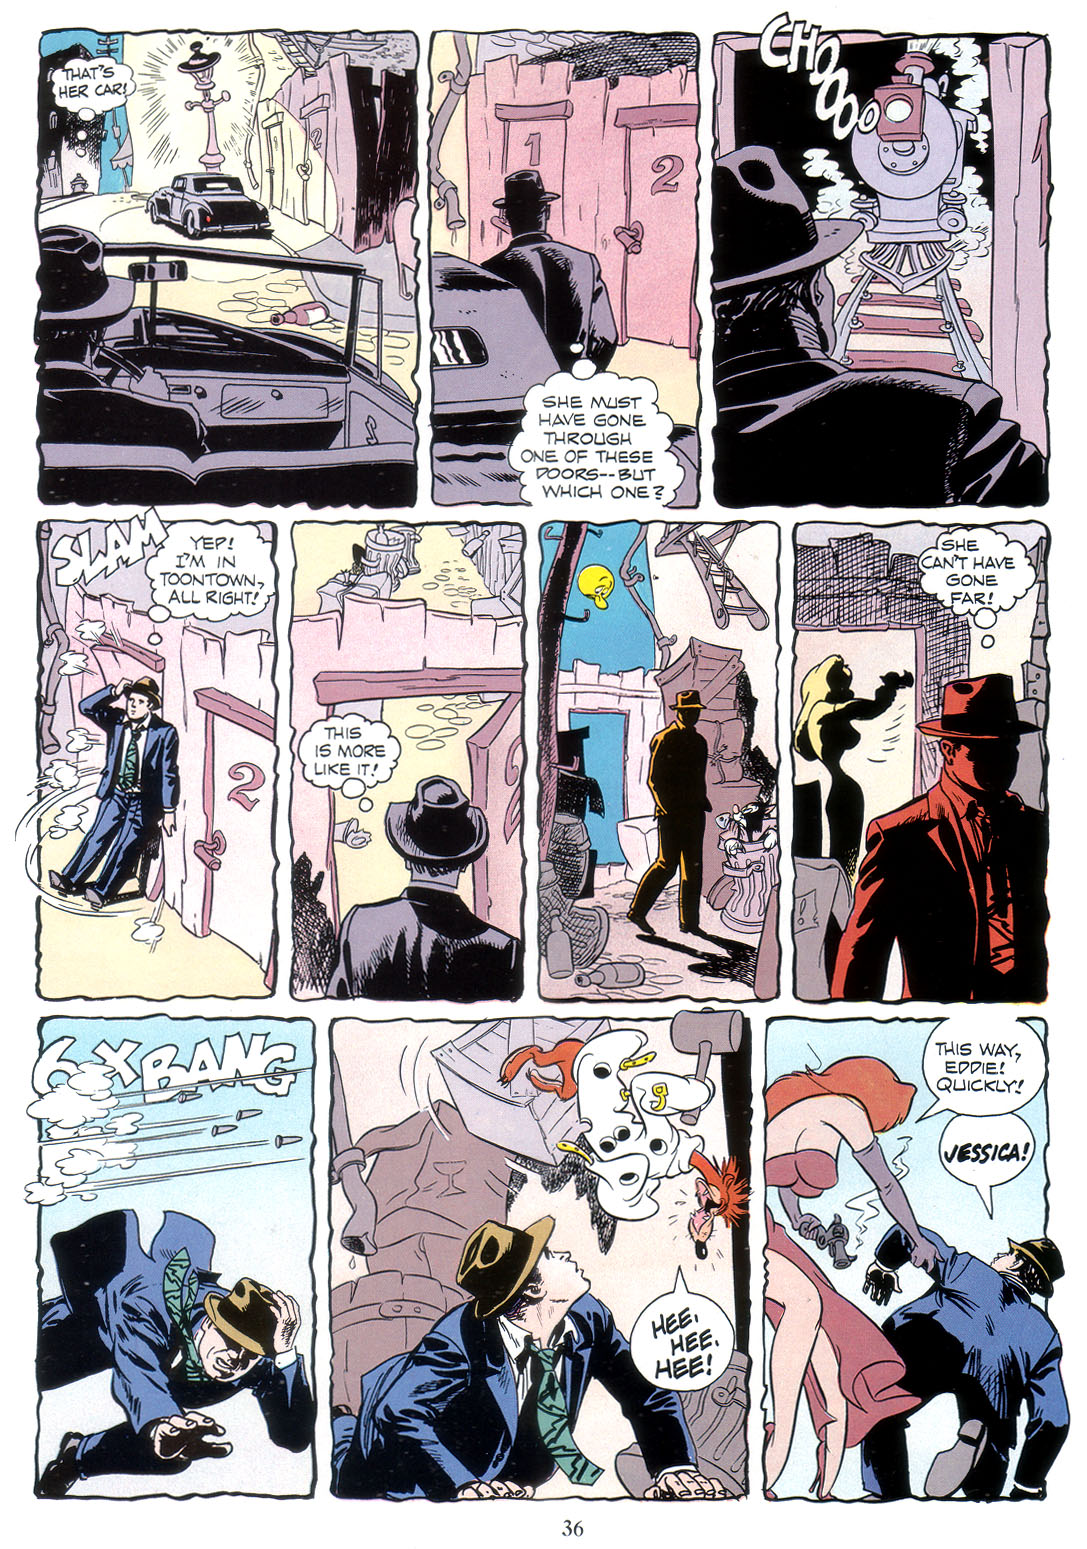 Marvel Graphic Novel issue 41 - Who Framed Roger Rabbit - Page 38